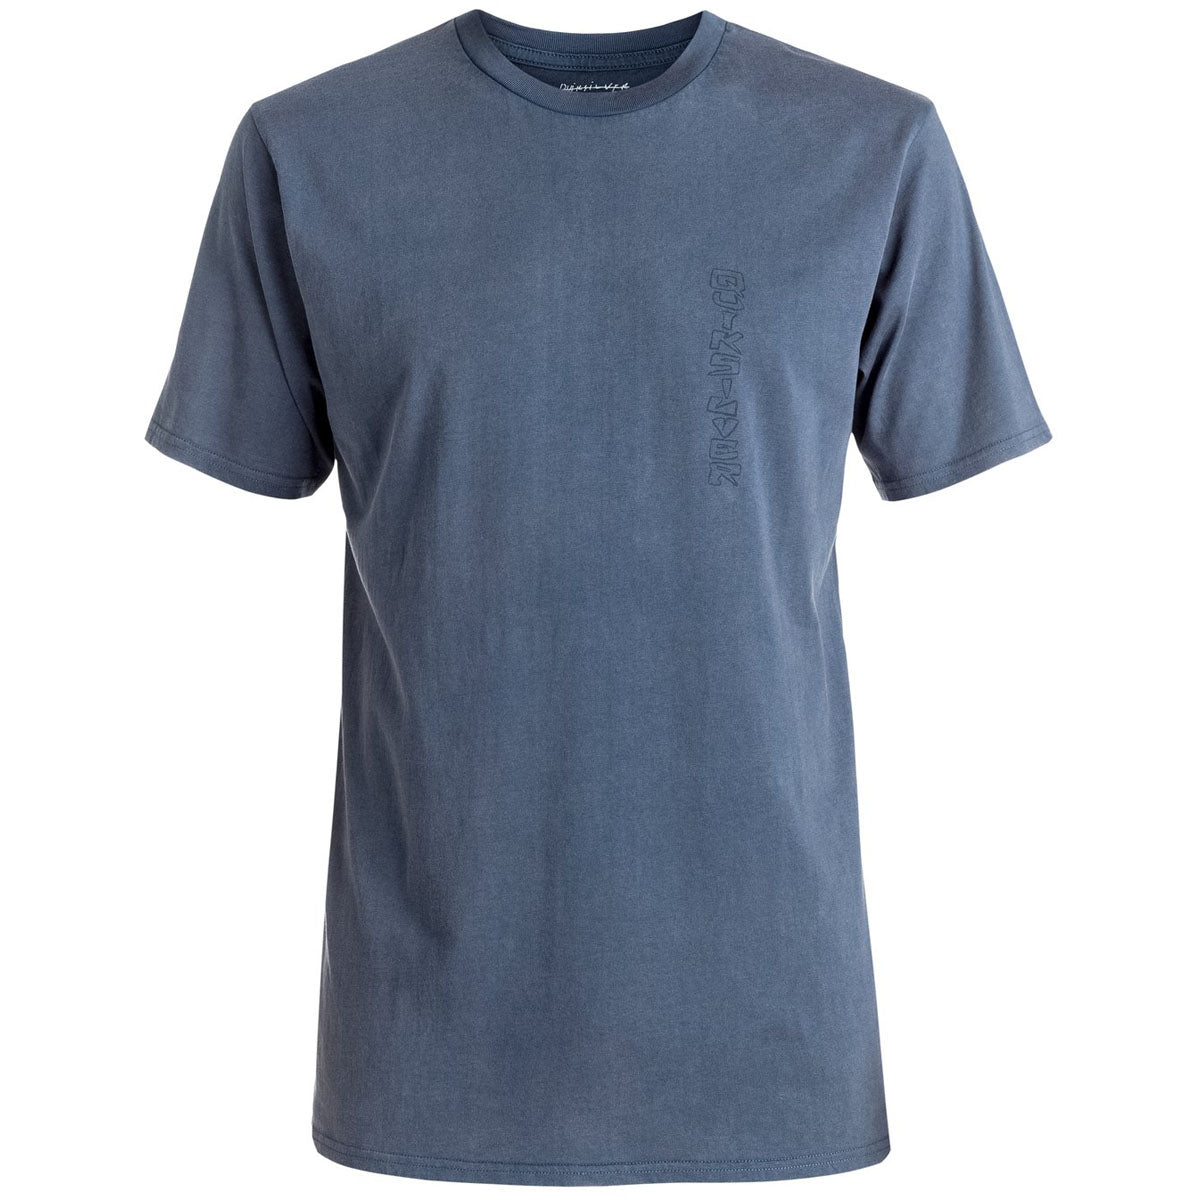 Quiksilver Shattered Men's Short-Sleeve Shirts - Dark Denim